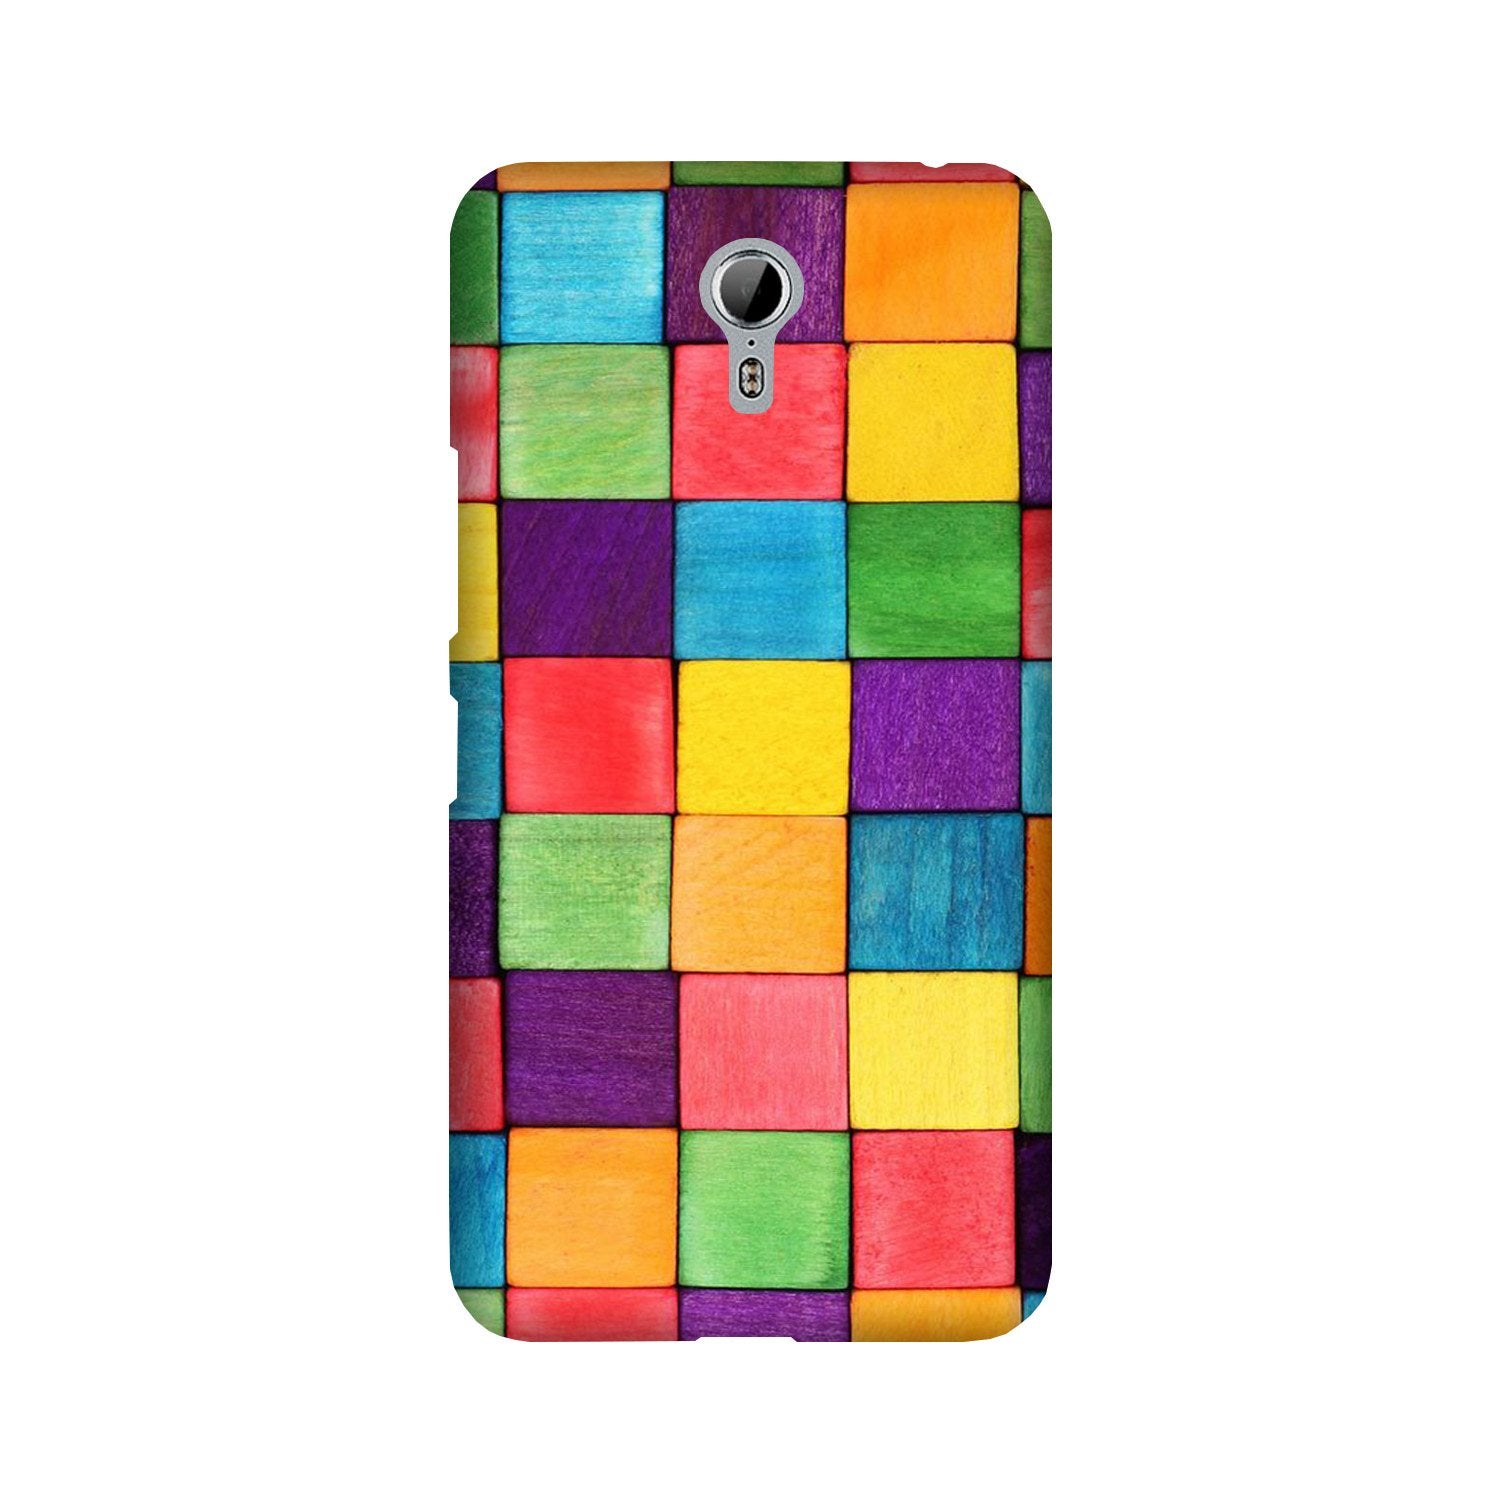 Colorful Square Case for Lenovo Zuk Z1 (Design No. 218)